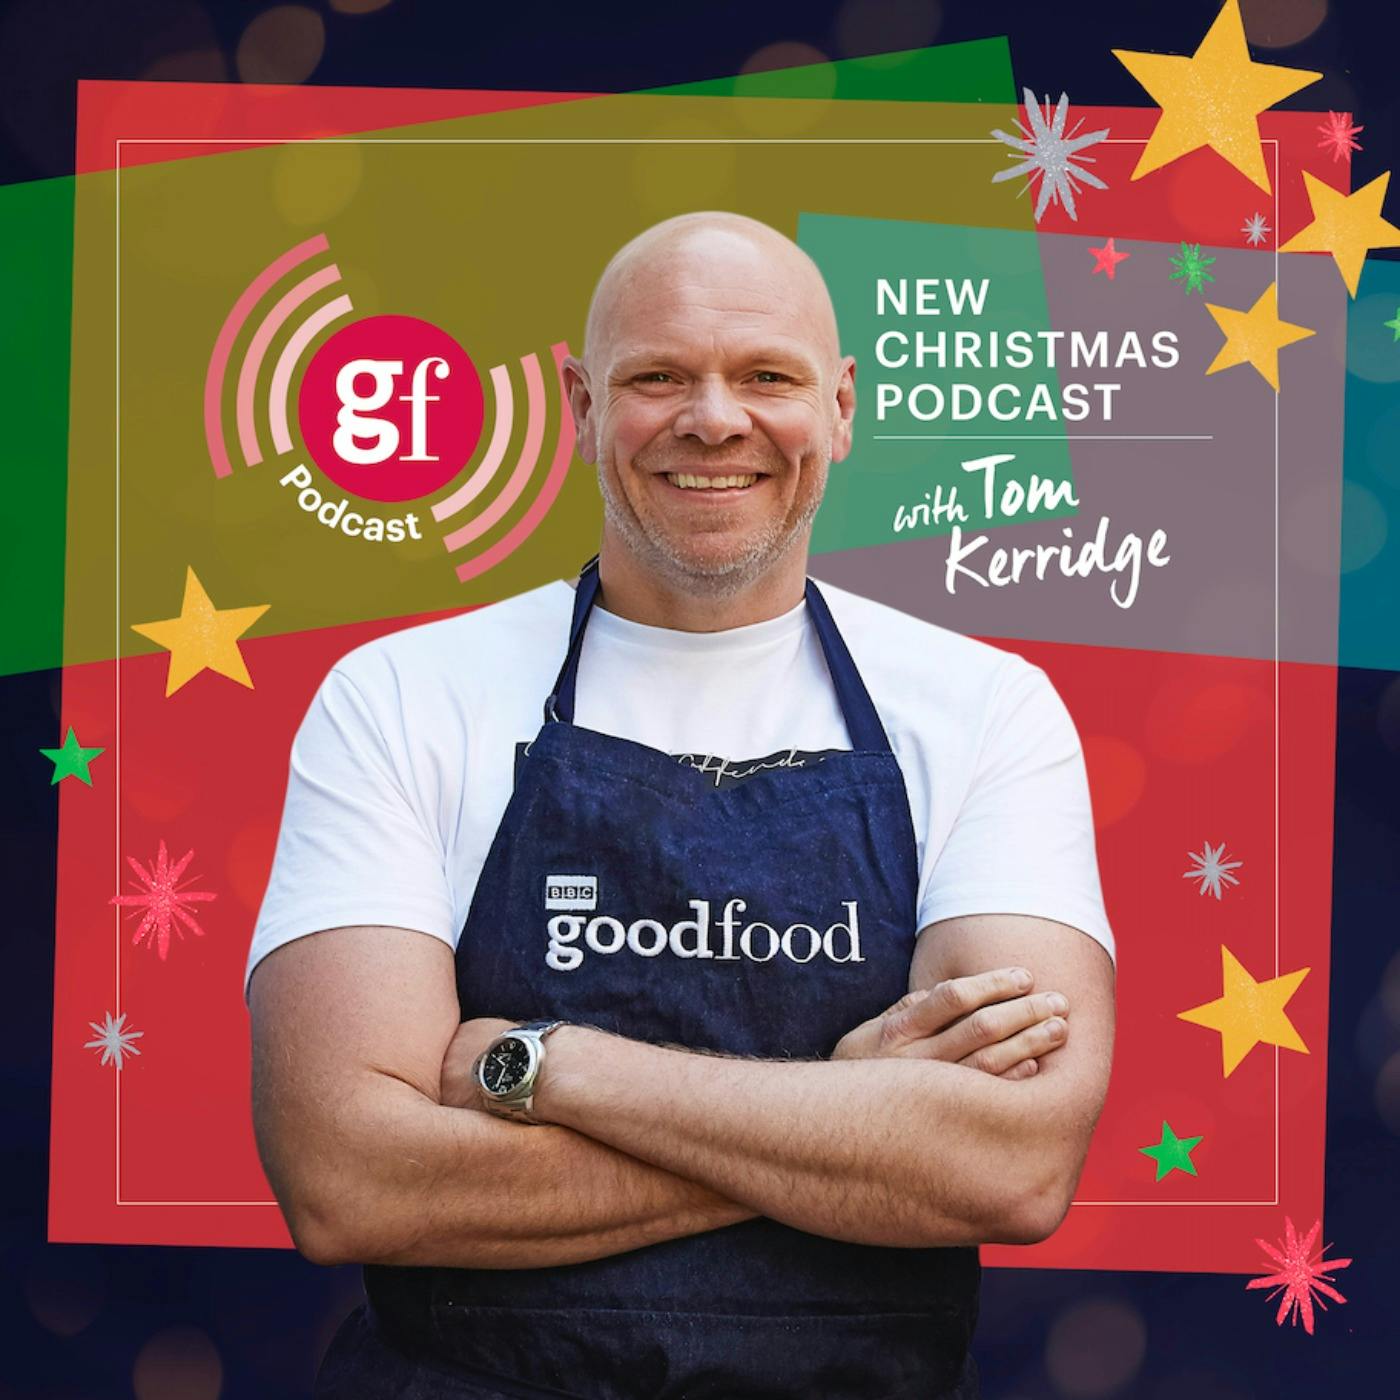 BBC Good Food Podcast with Tom Kerridge at Christmas!